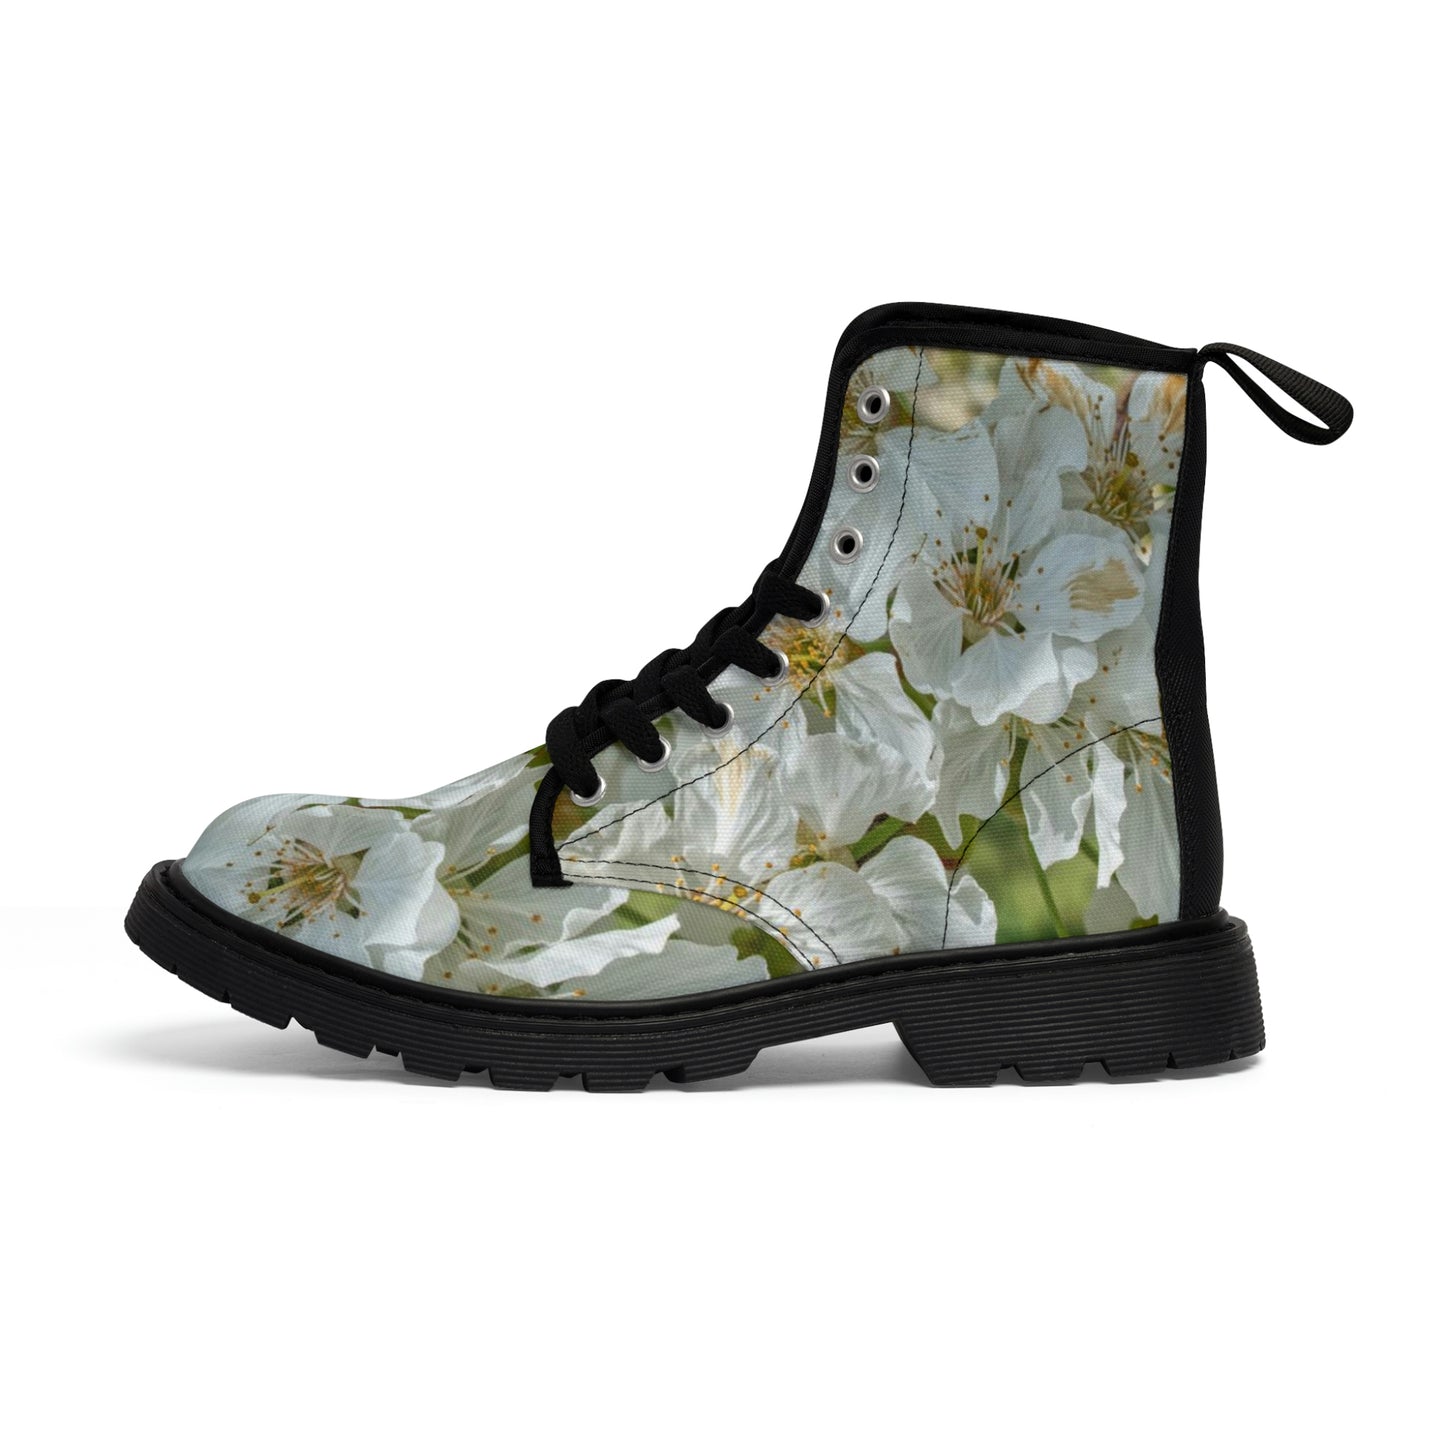 Cherry Blossom Women's Canvas Art Boots